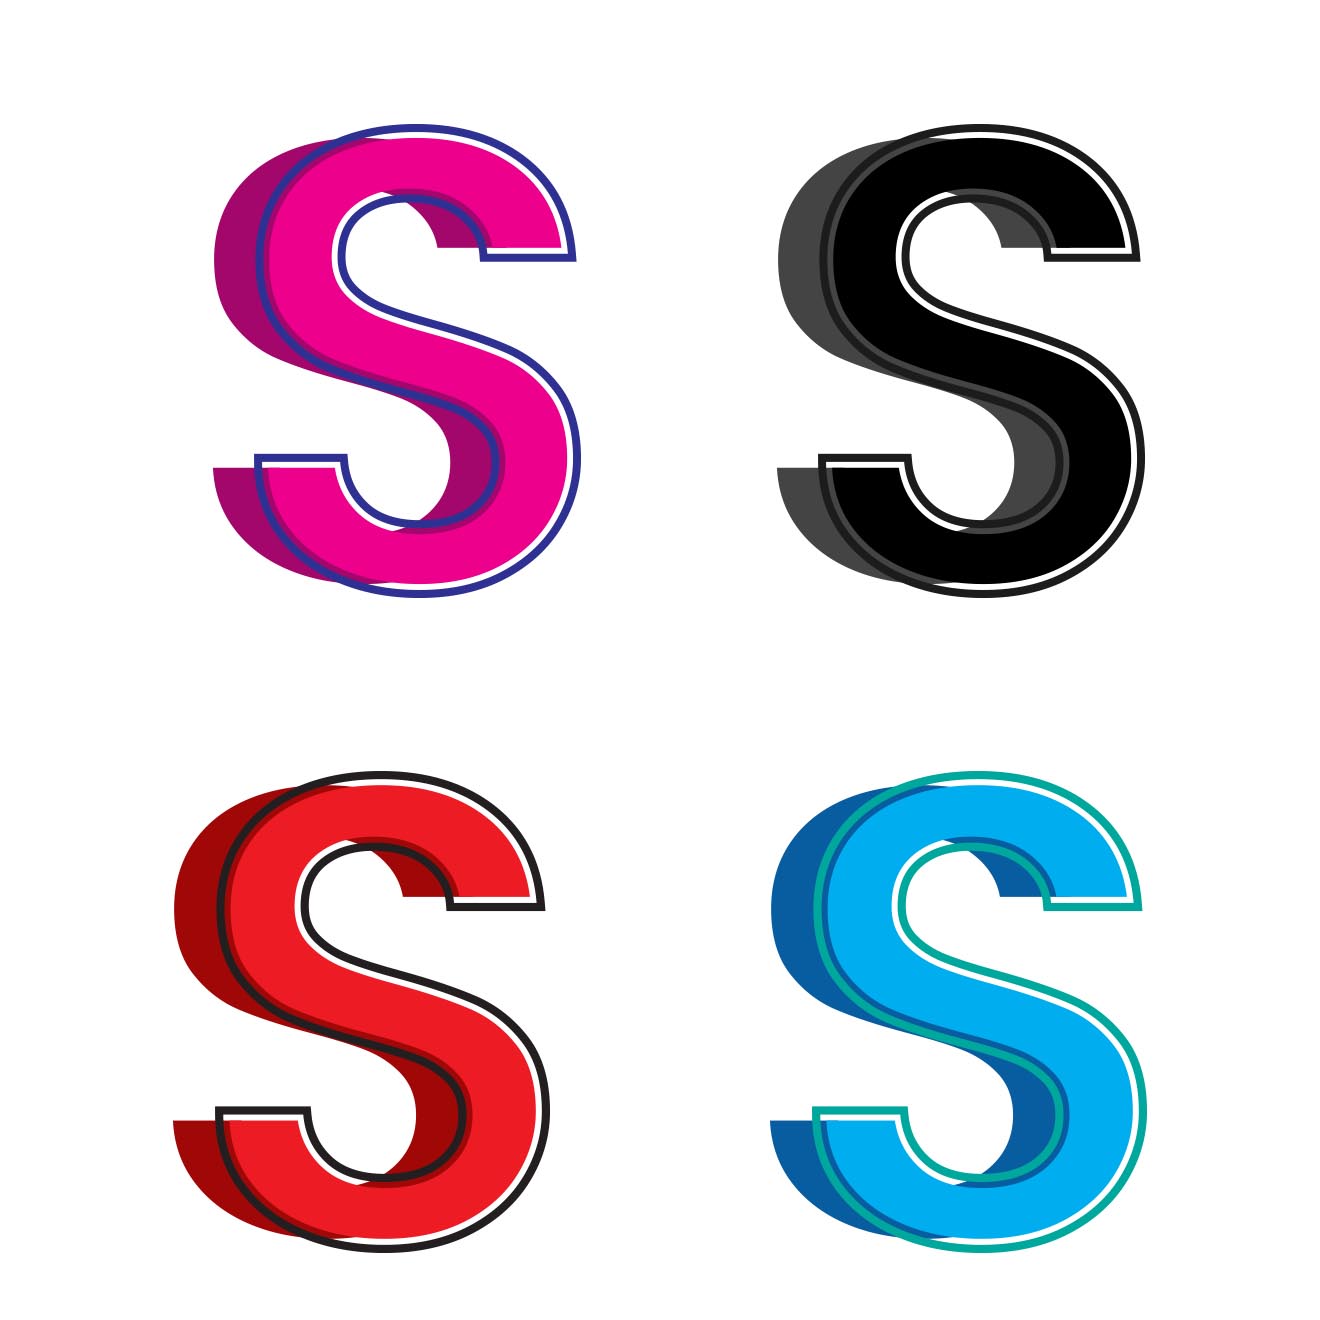 3D Letter S Logo Vector Design - Only 10$ preview image.